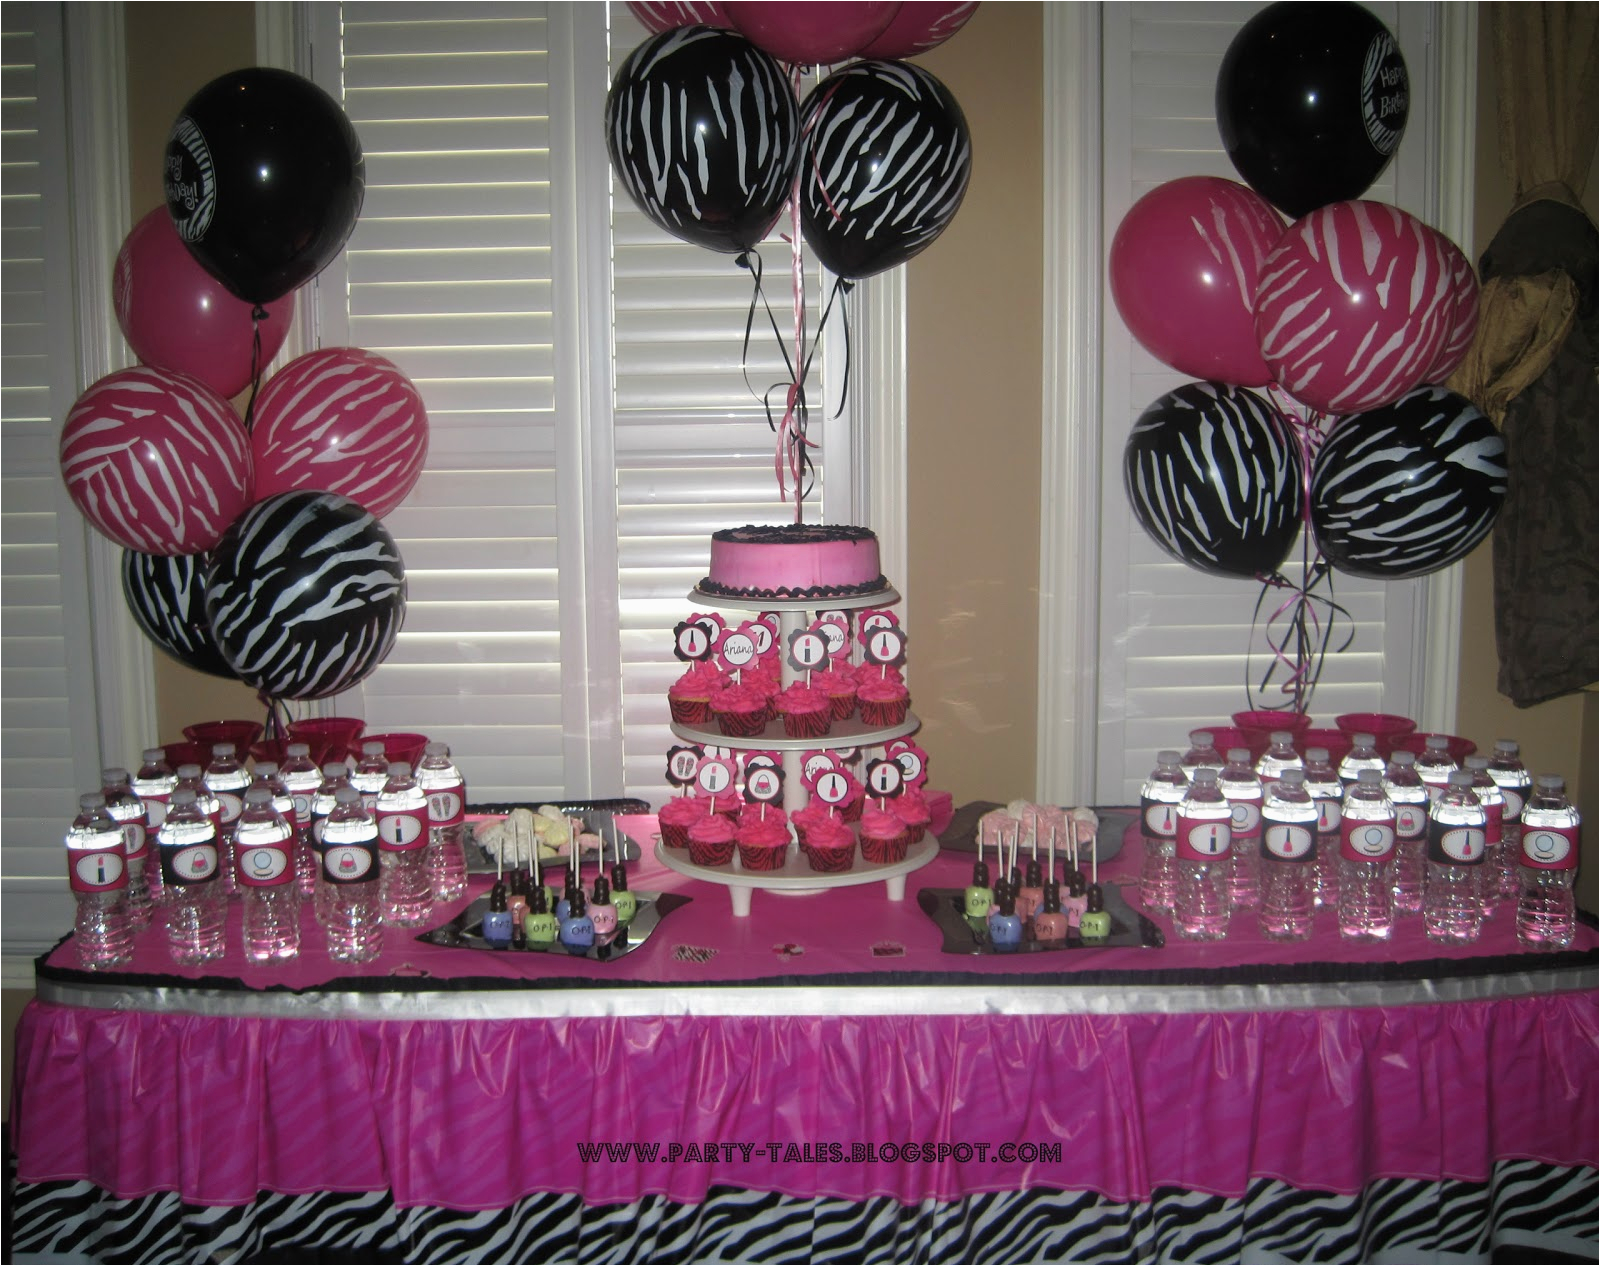 Zebra Print Birthday Decorations Party Tales Birthday Party Zebra Print and Hot Pink